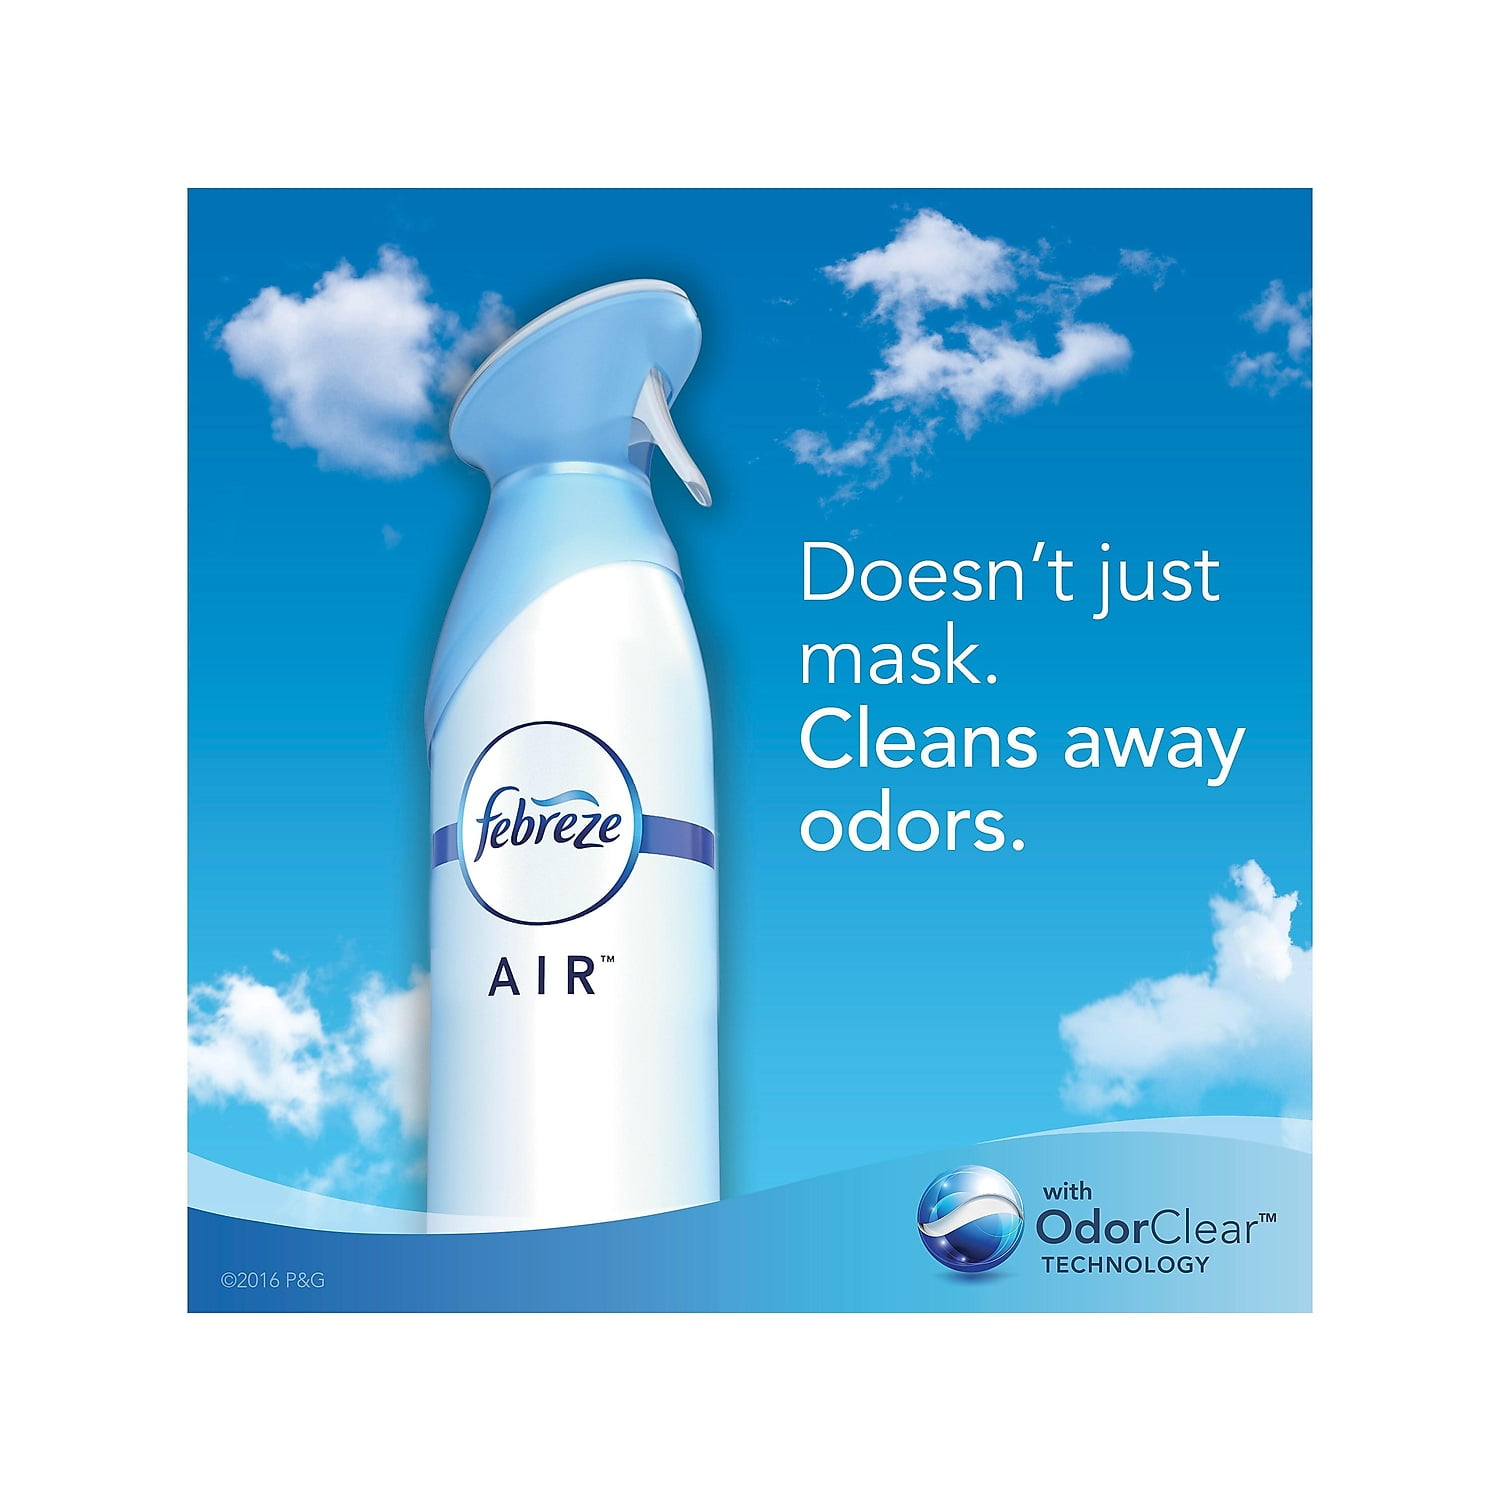 Febreze Air Odor Eliminator 8.8-fl oz Downy April Fresh Dispenser Air  Freshener in the Air Fresheners department at